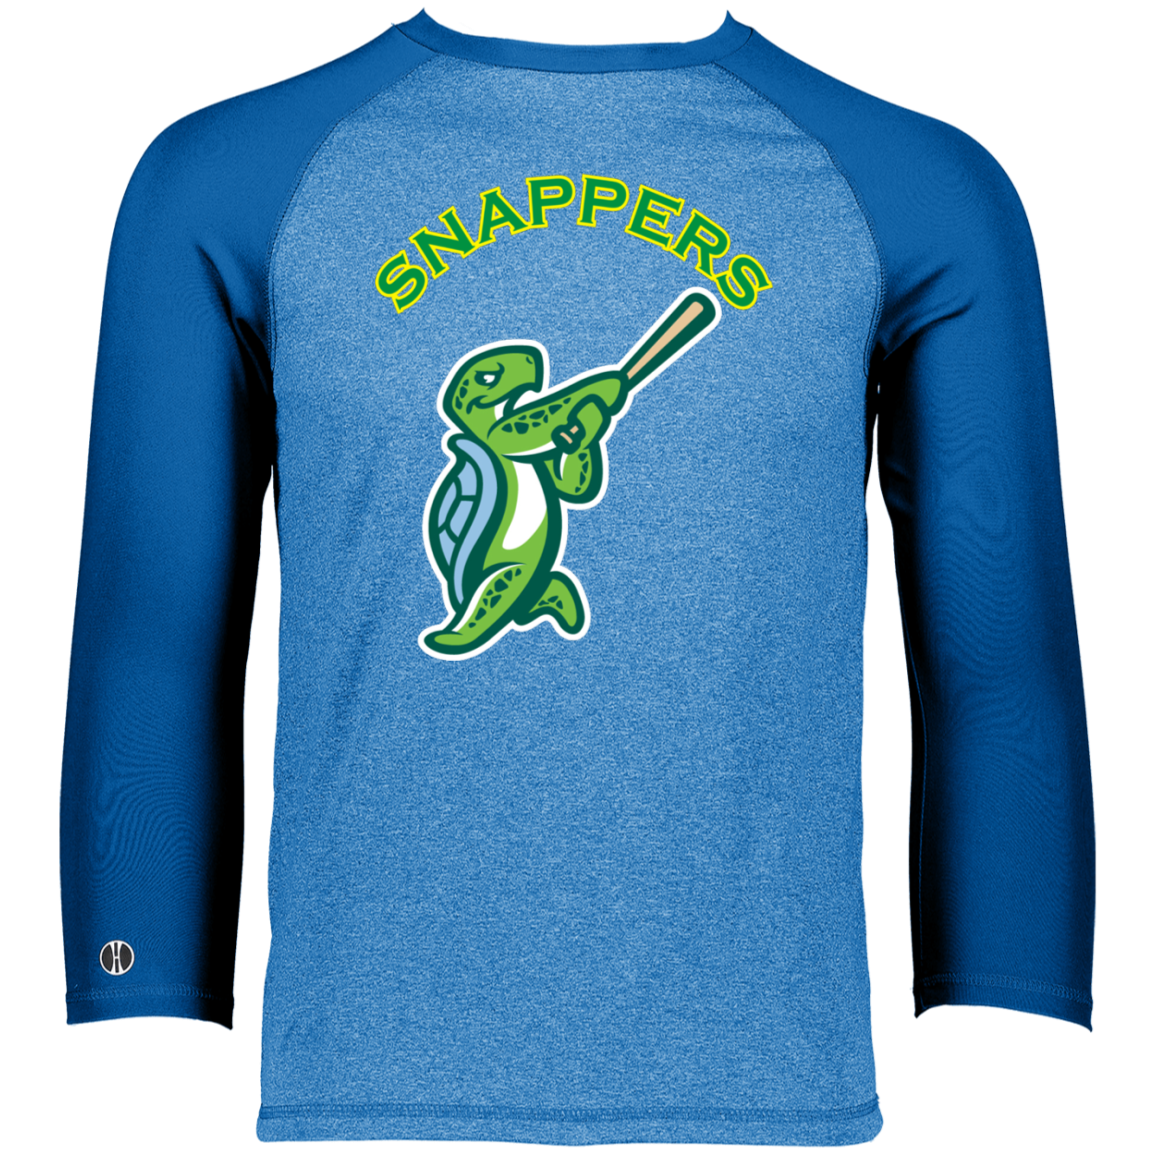 Snappers Holloway Men's Typhoon T-Shirt